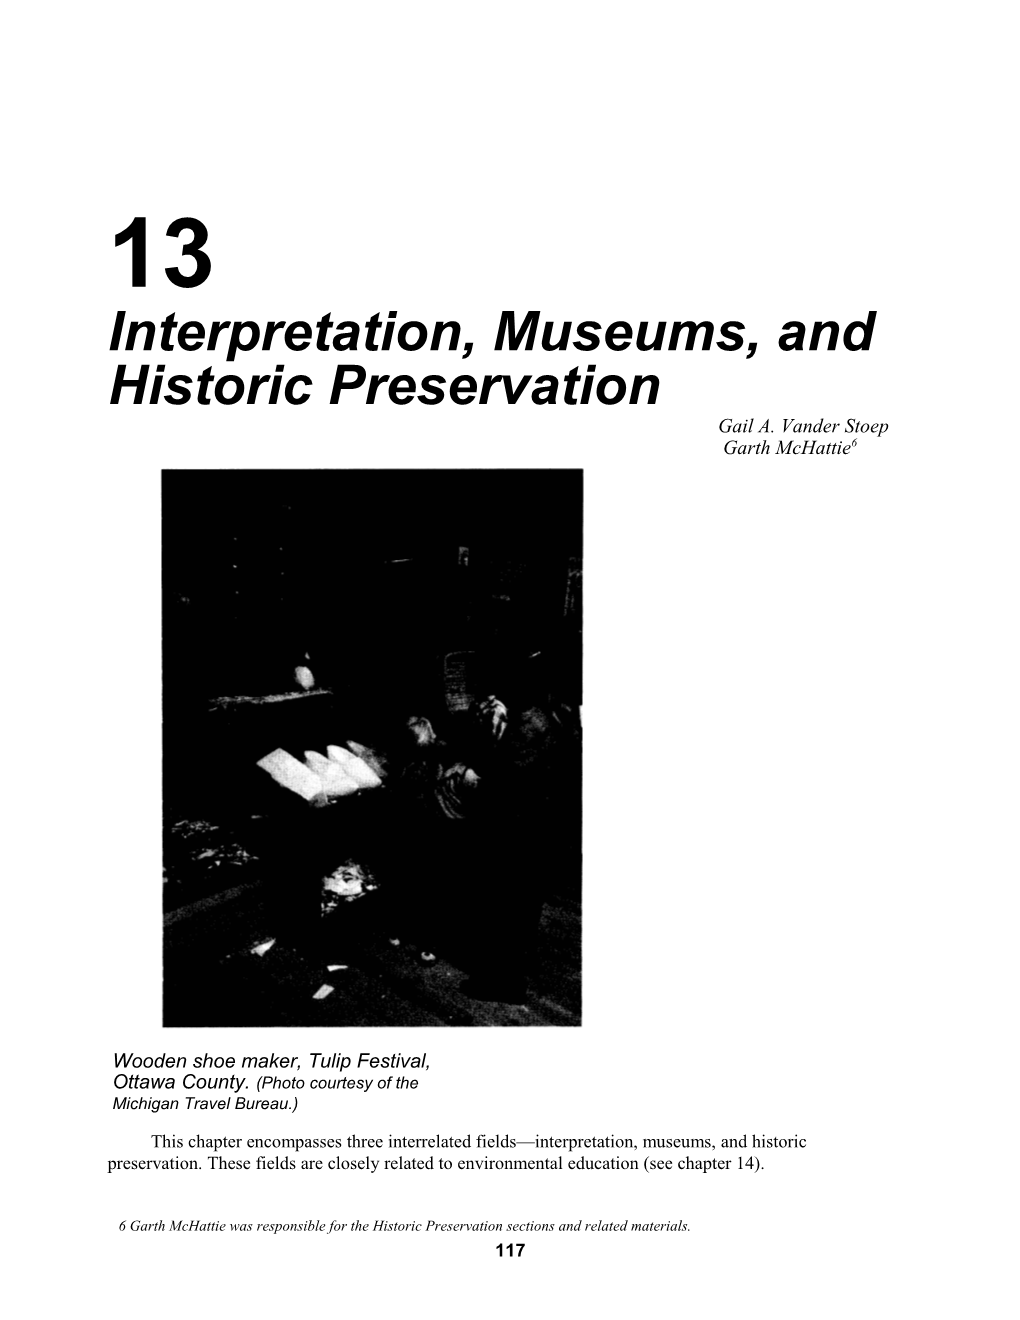 Interpretation, Museums, and Historic Preservation